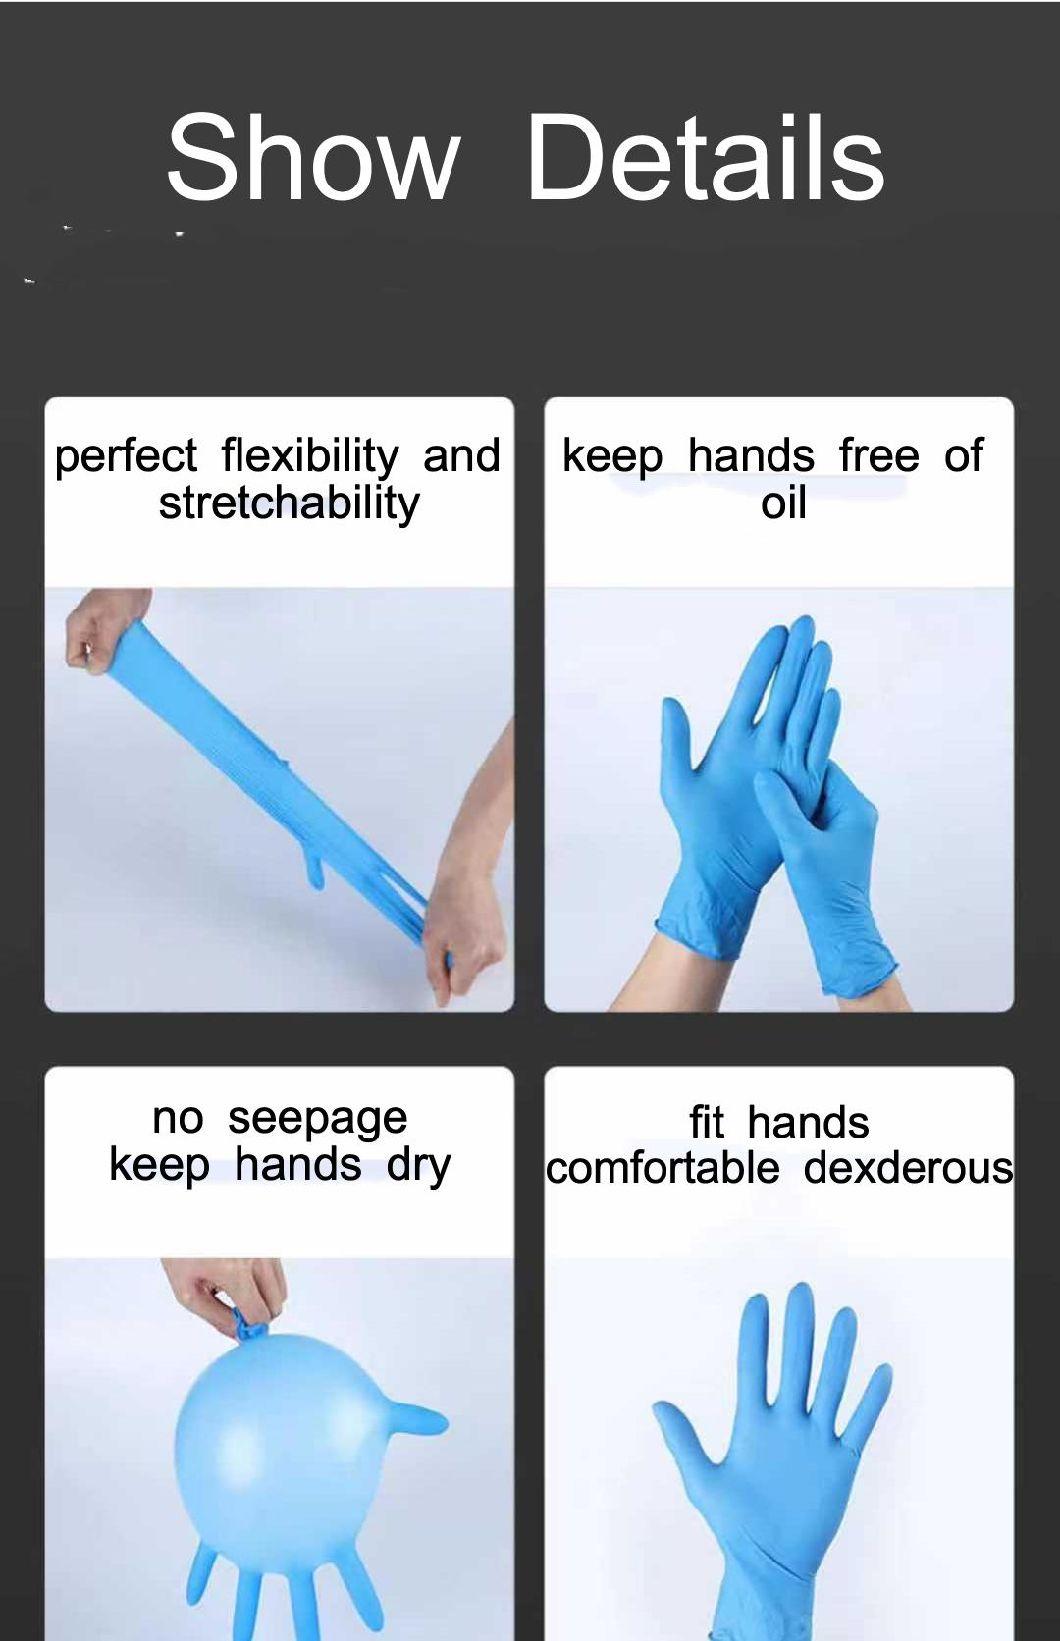 Nitrile Vinyl Glovesfda CE Disposable Nitrile Blend Gloves